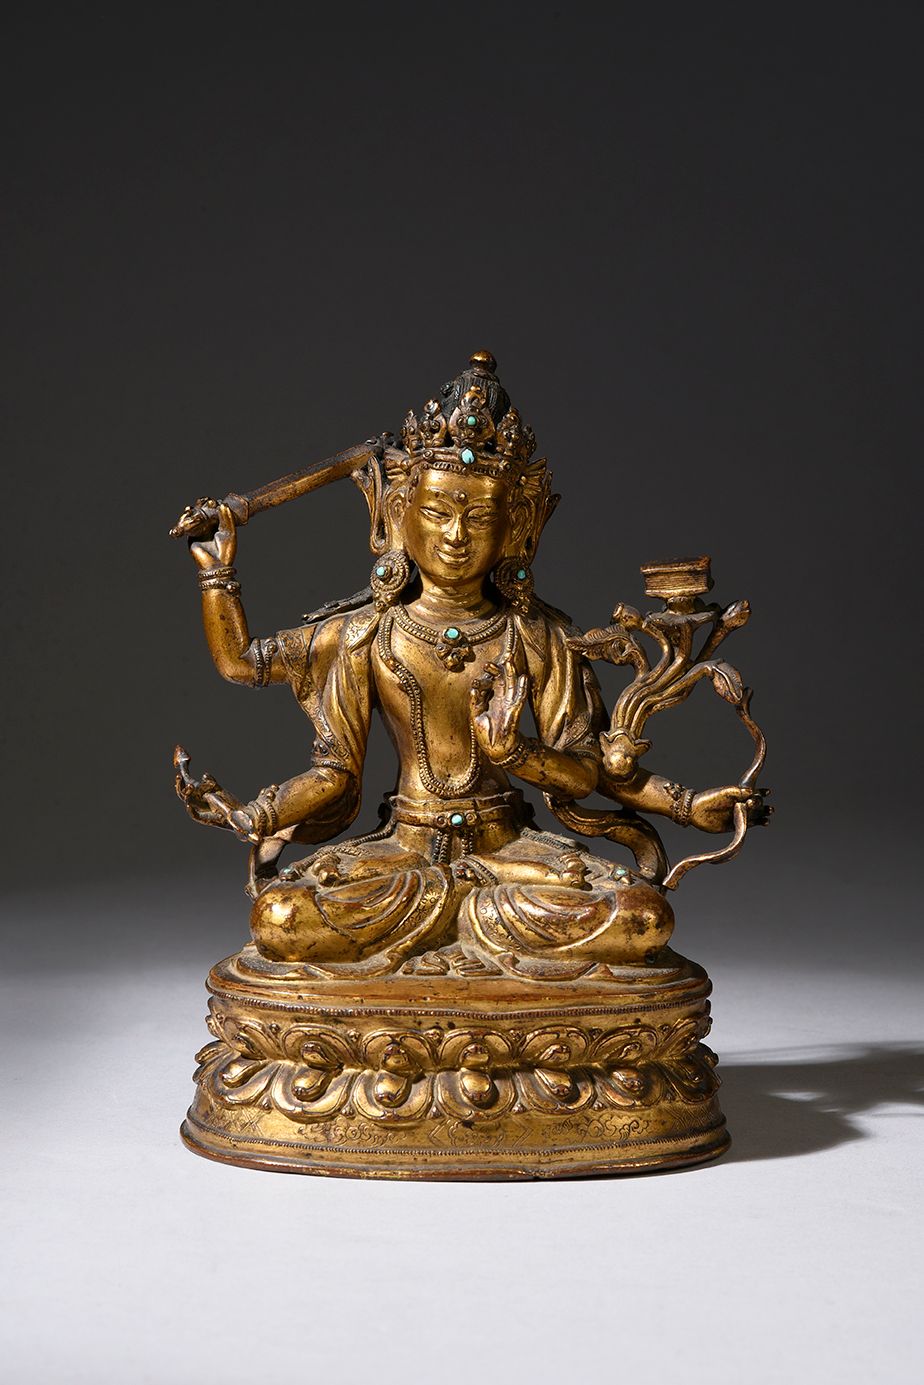 Null Figura de Rama
Escultura de bronce de la deidad india Rama, el séptimo avat&hellip;